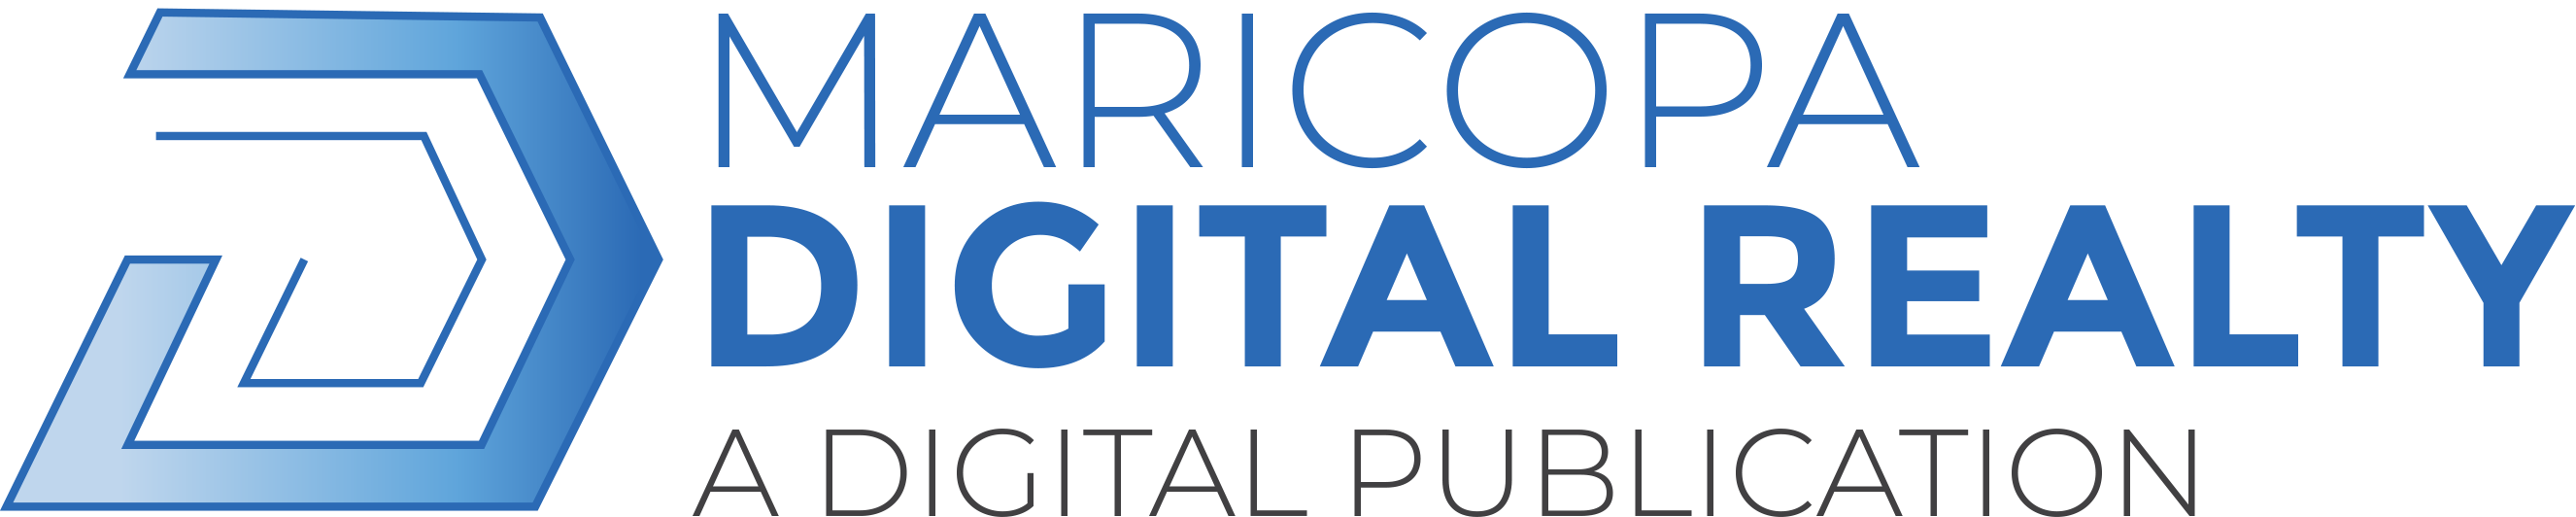 Maricopa Digital Realty Logo